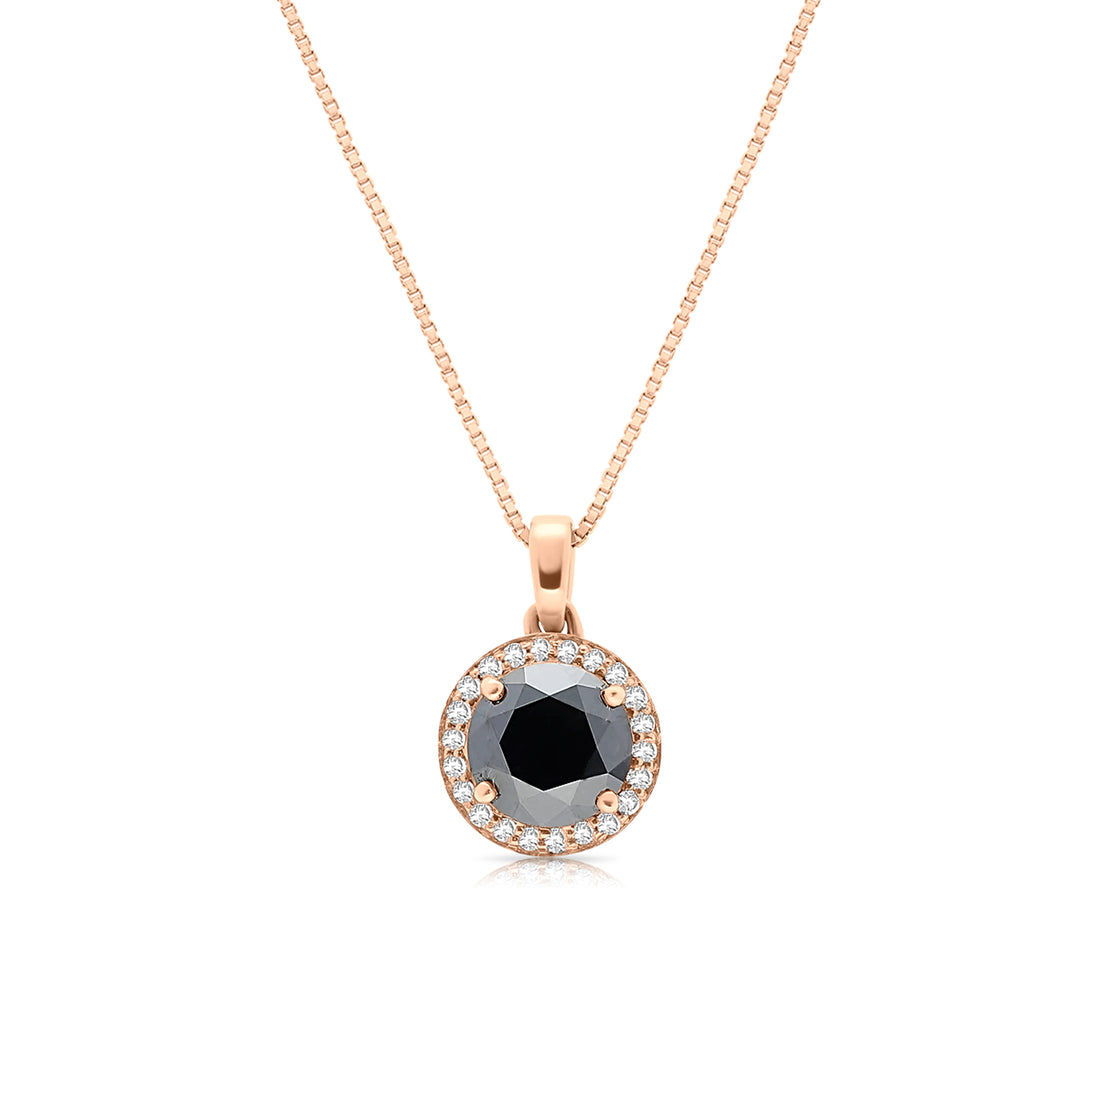 Rose Gold Black Diamond Pendant Necklace - 1.6 Carat